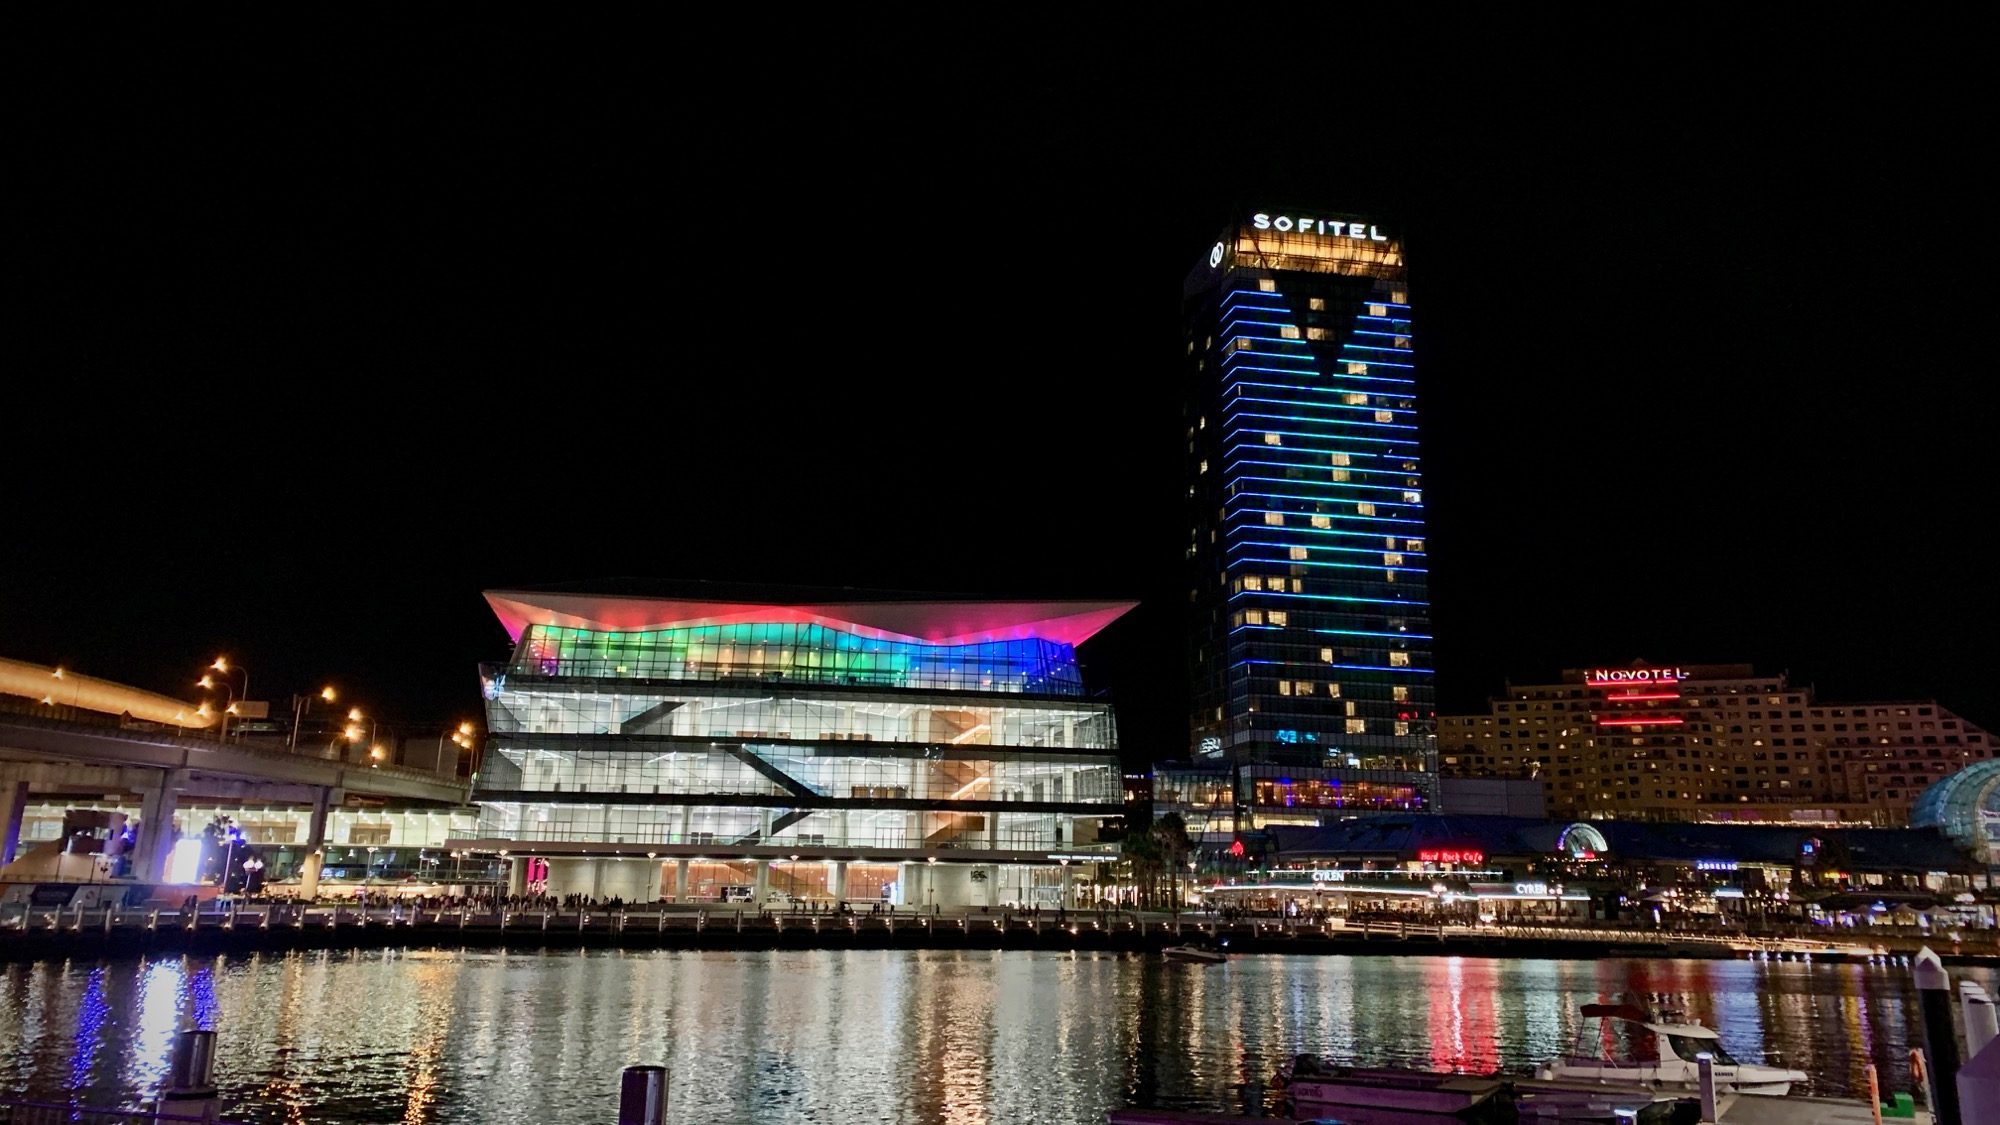 International Convention Centre Sydney